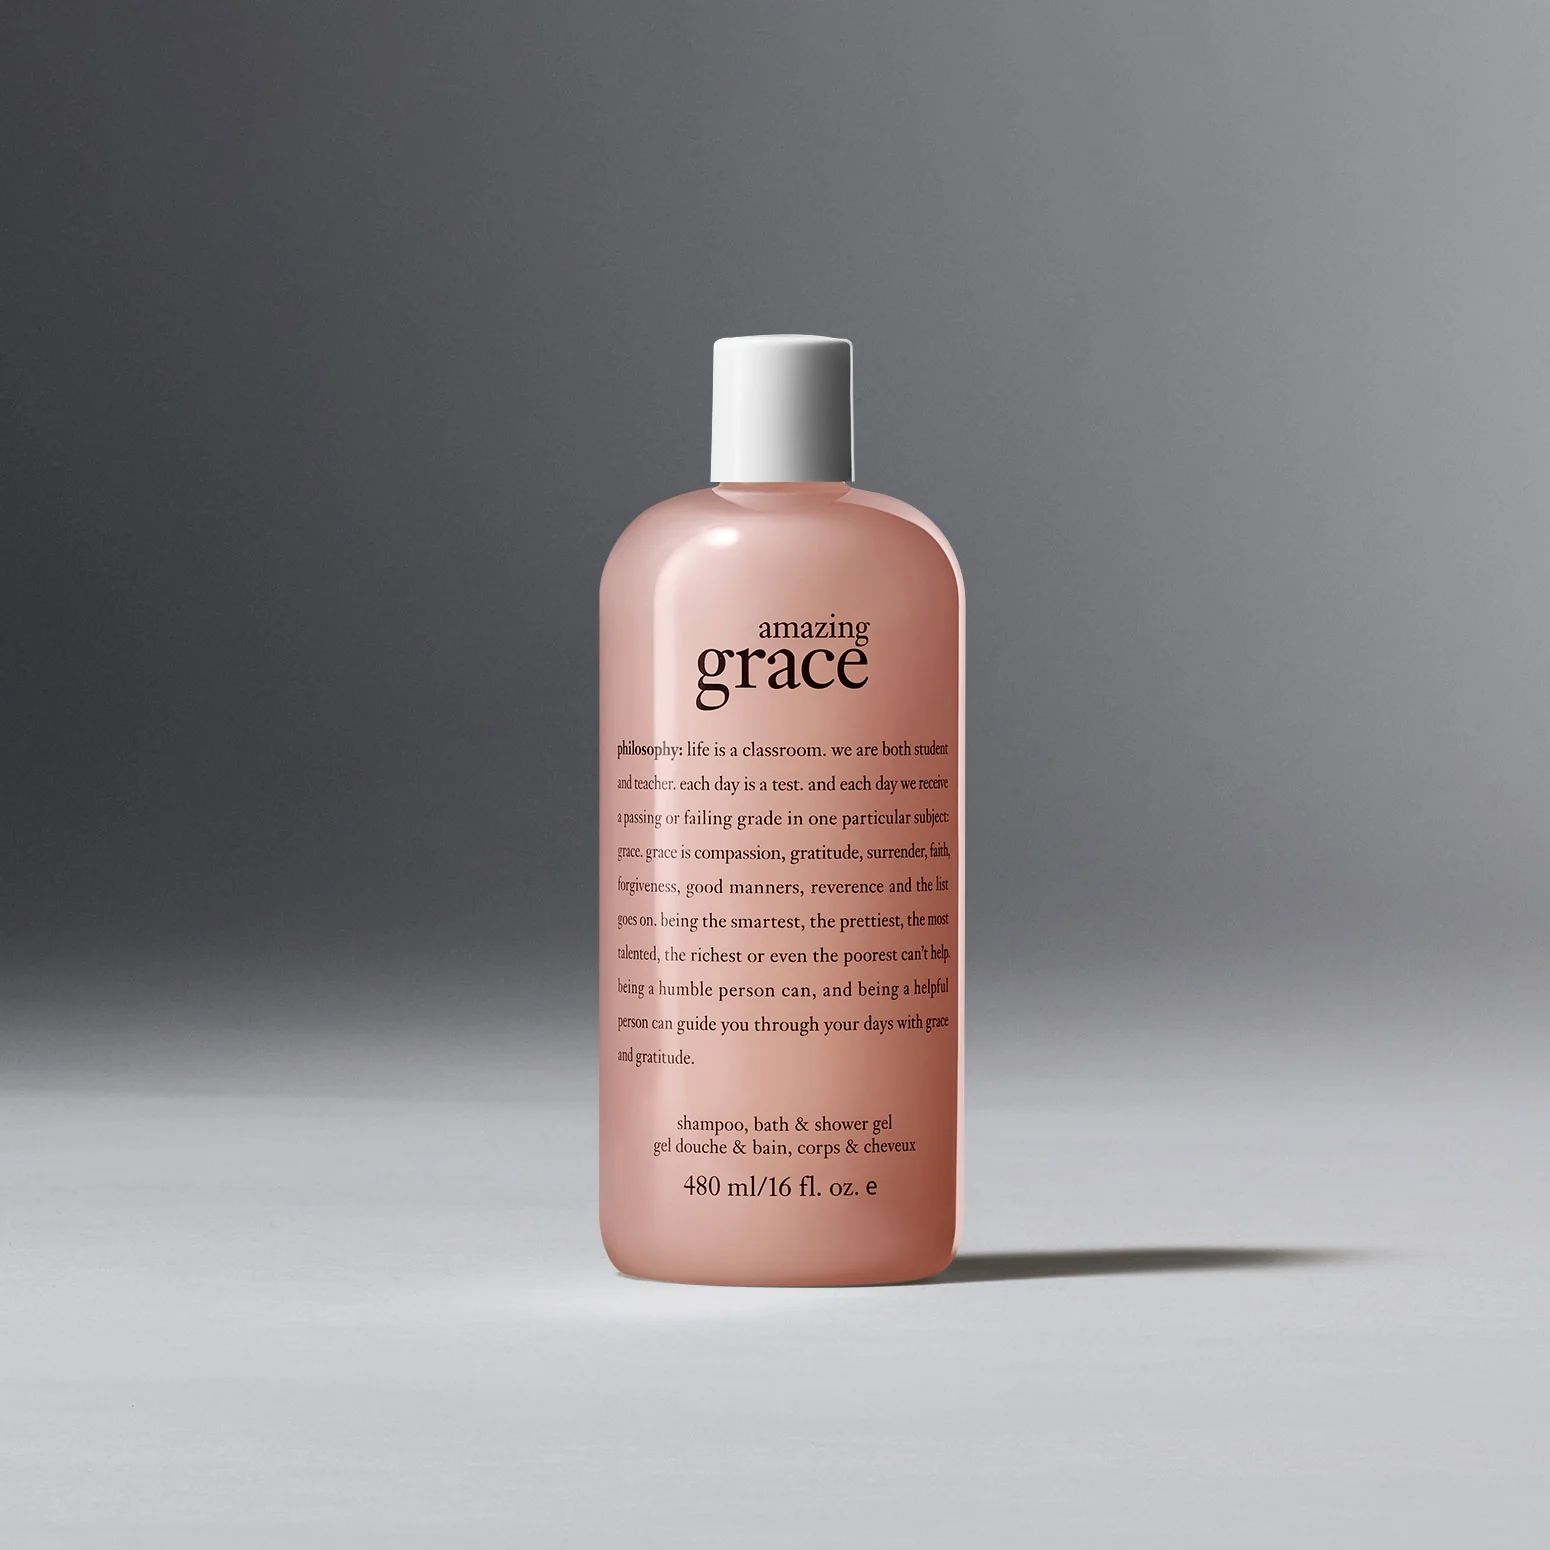 amazing grace shampoo, bath & shower gel | Philosophy